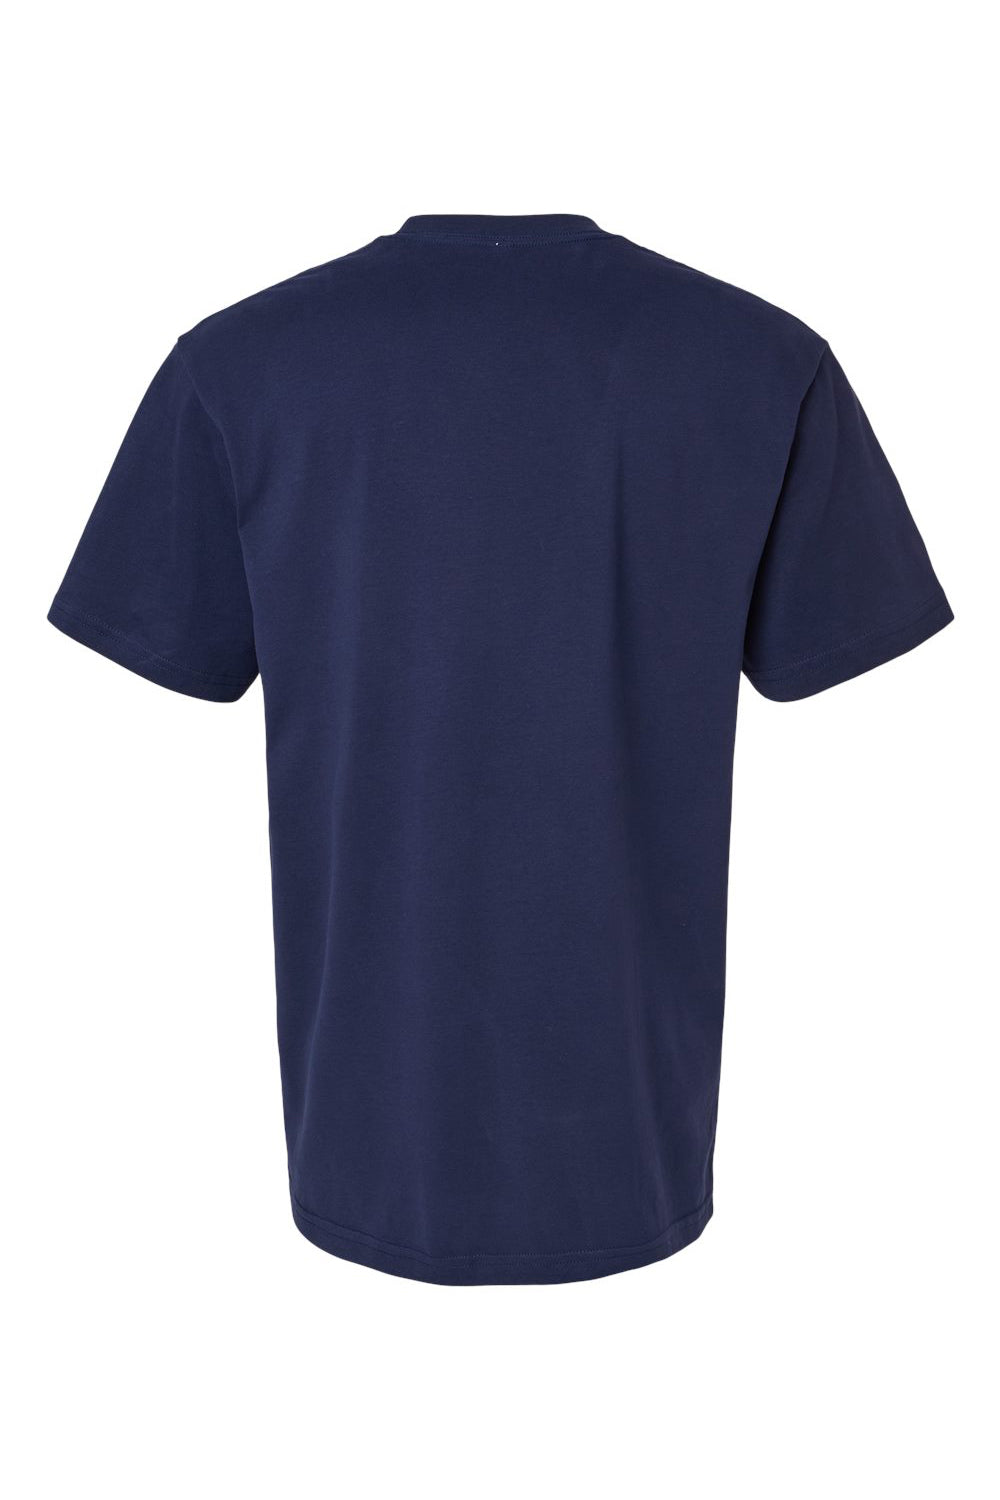 American Apparel 5389 Mens Sueded Cloud Short Sleeve Crewneck T-Shirt Navy Blue Flat Back